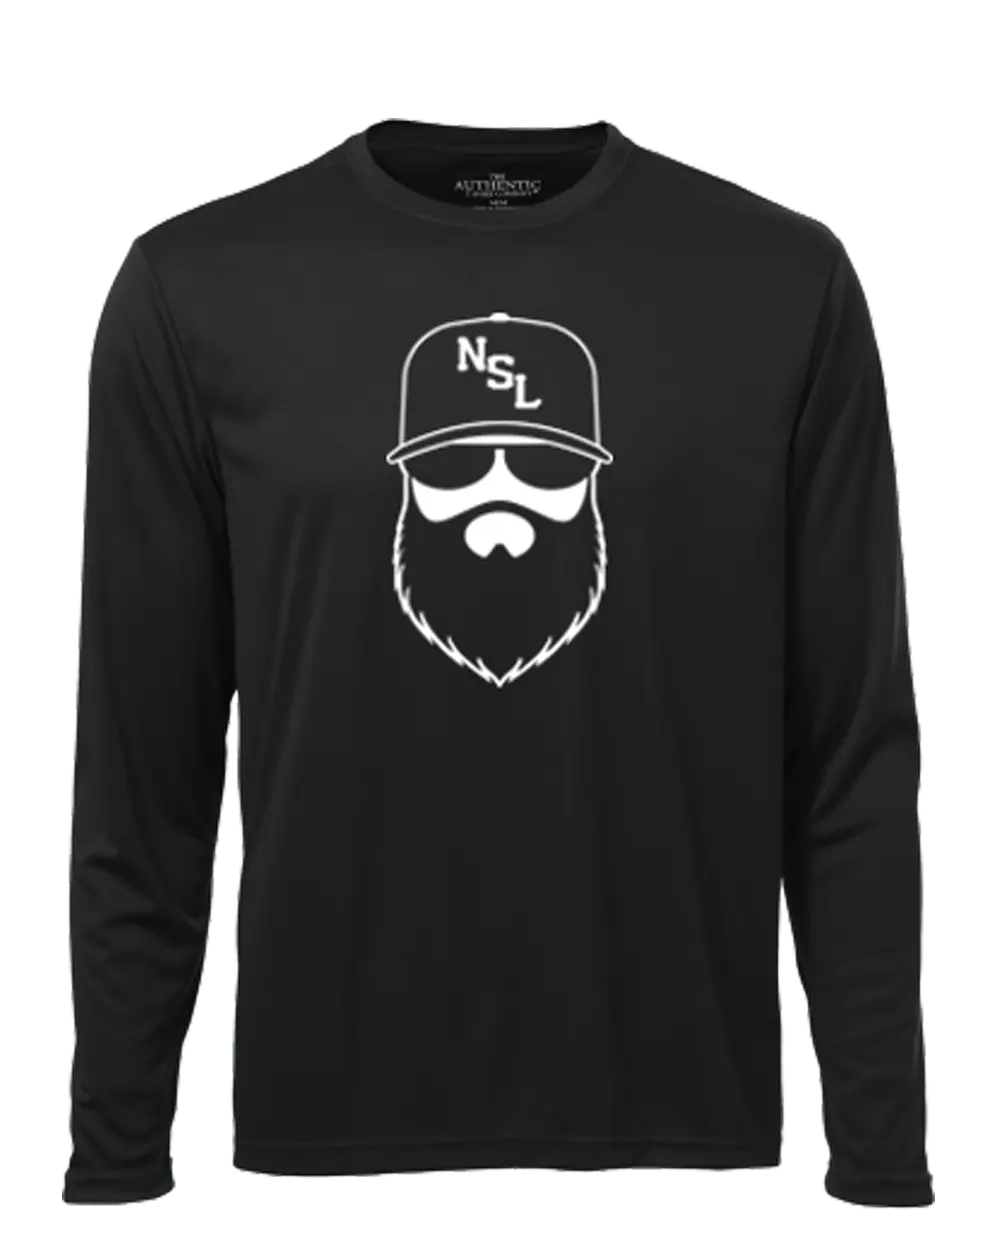 No Shave Life Beard League Black Long Sleeve Shirt|Long Sleeve Shirt